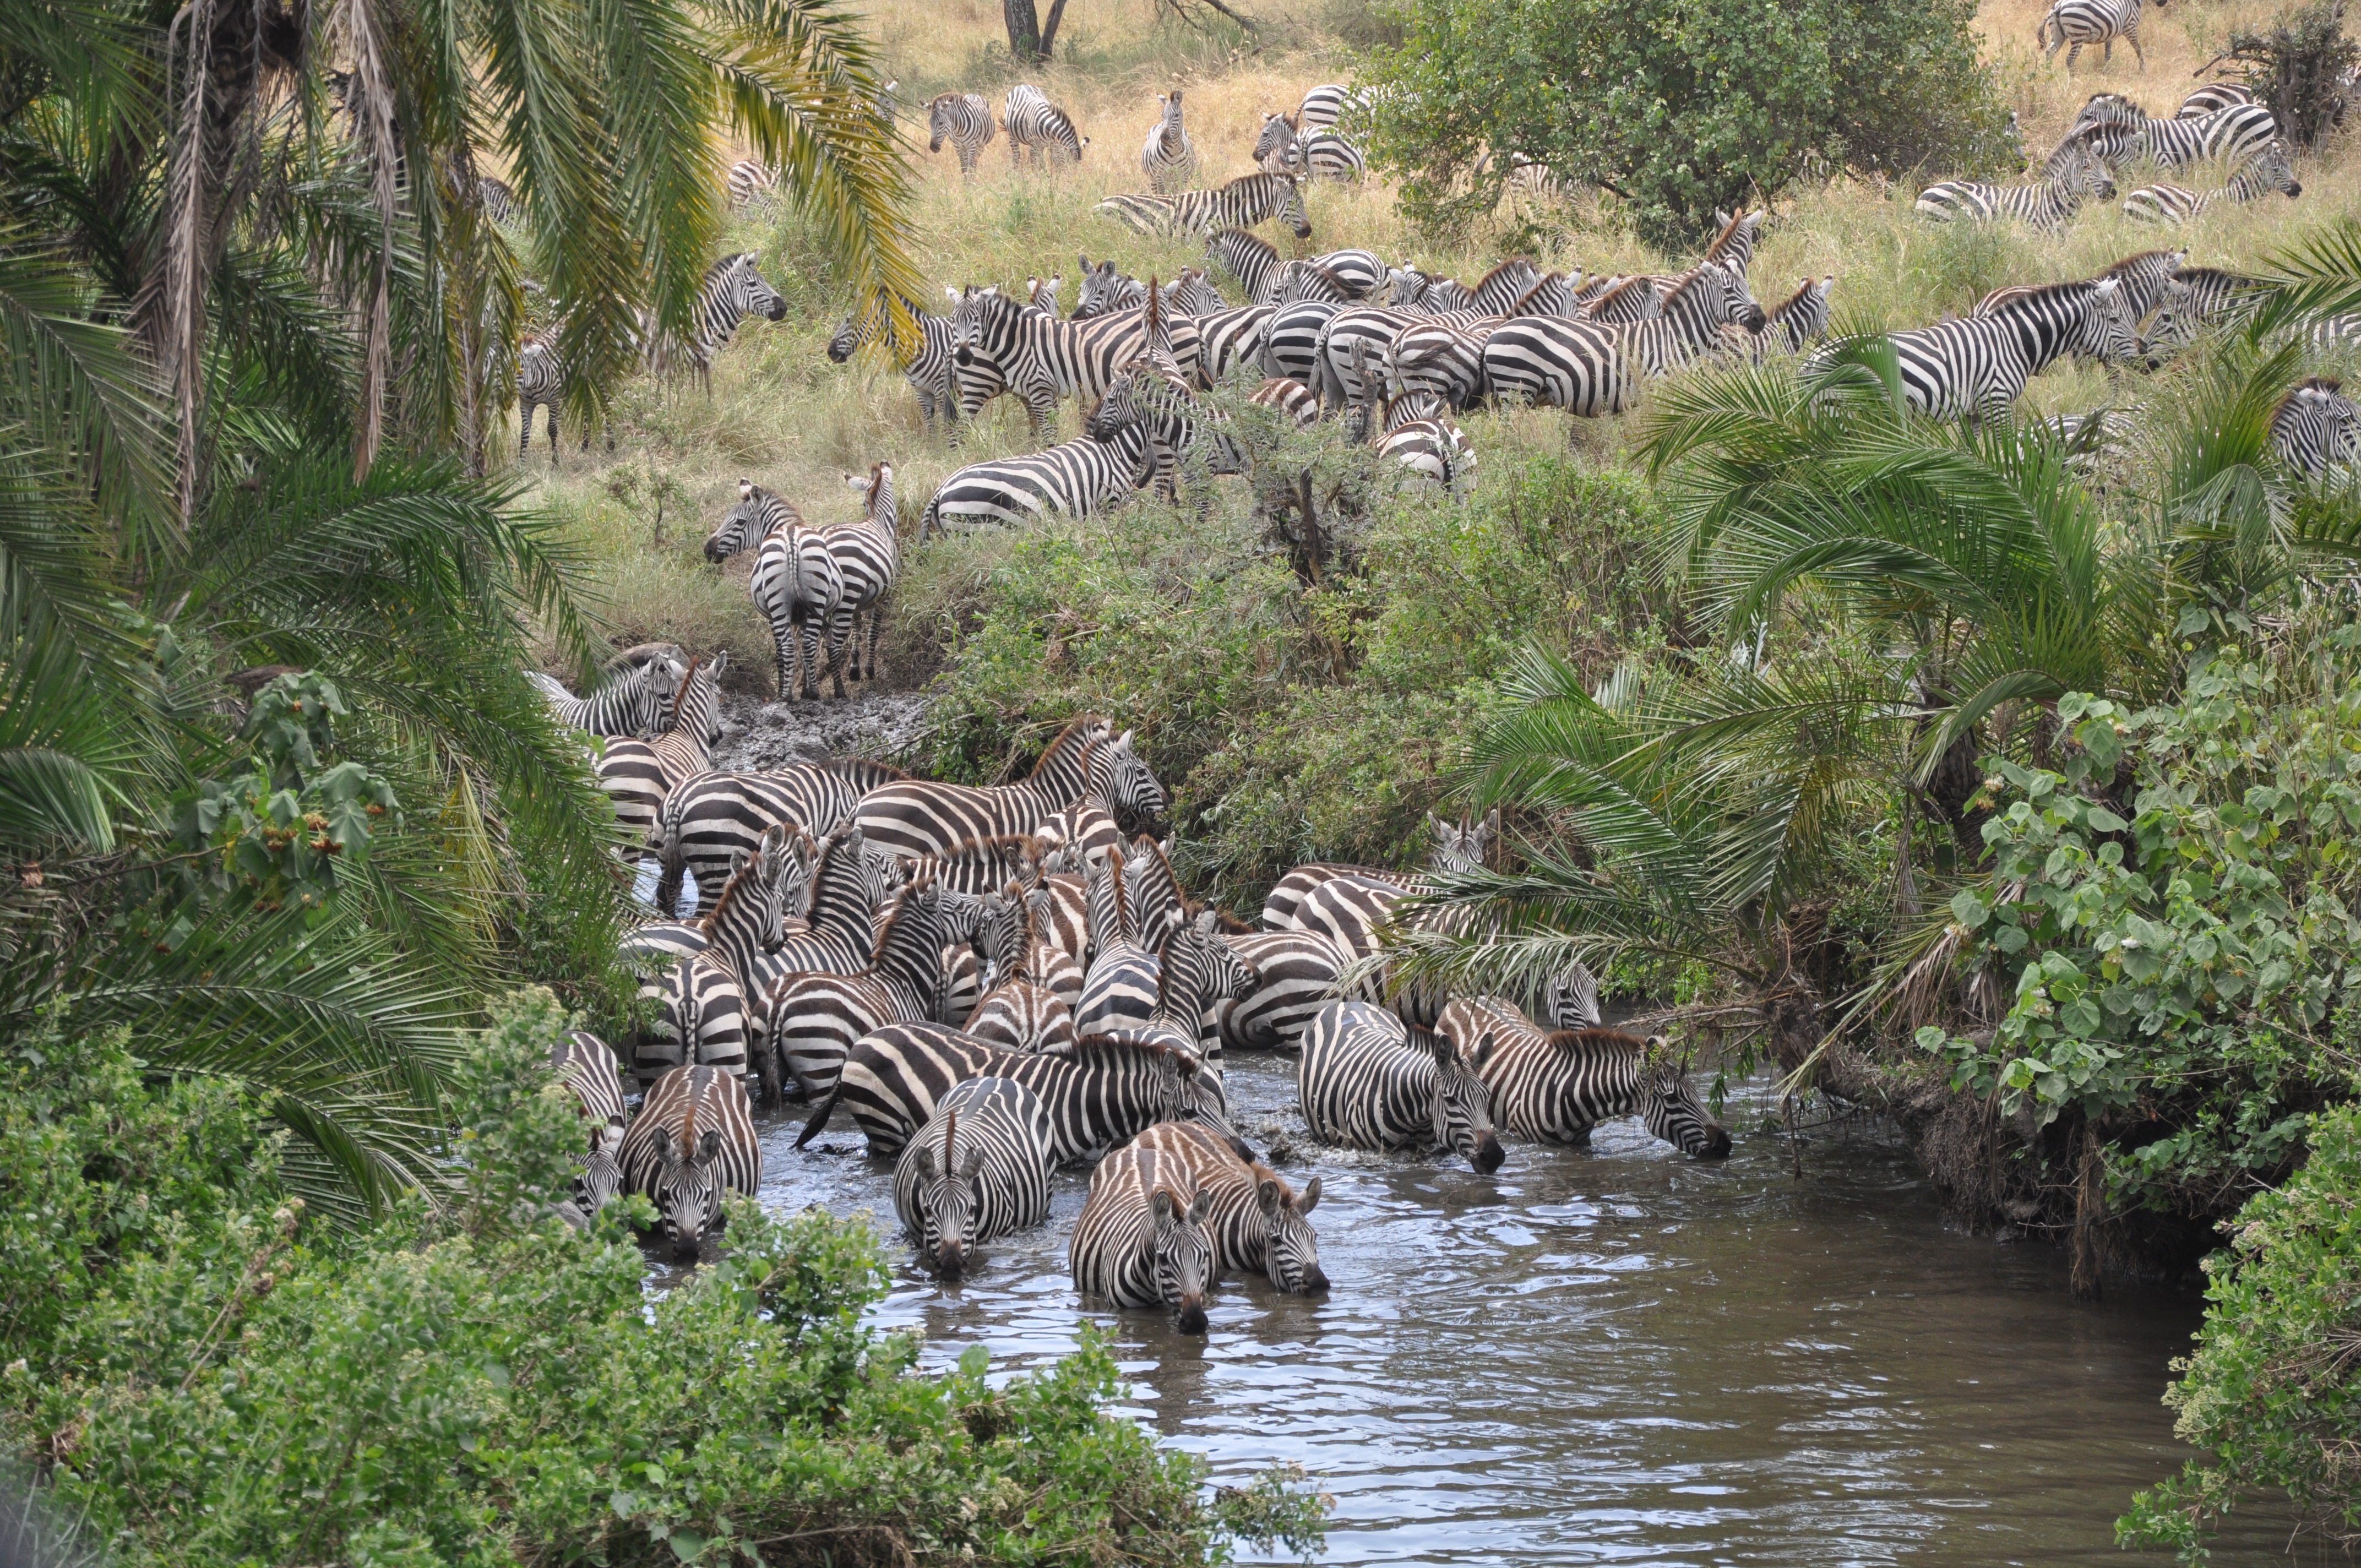 Serengeti zebras